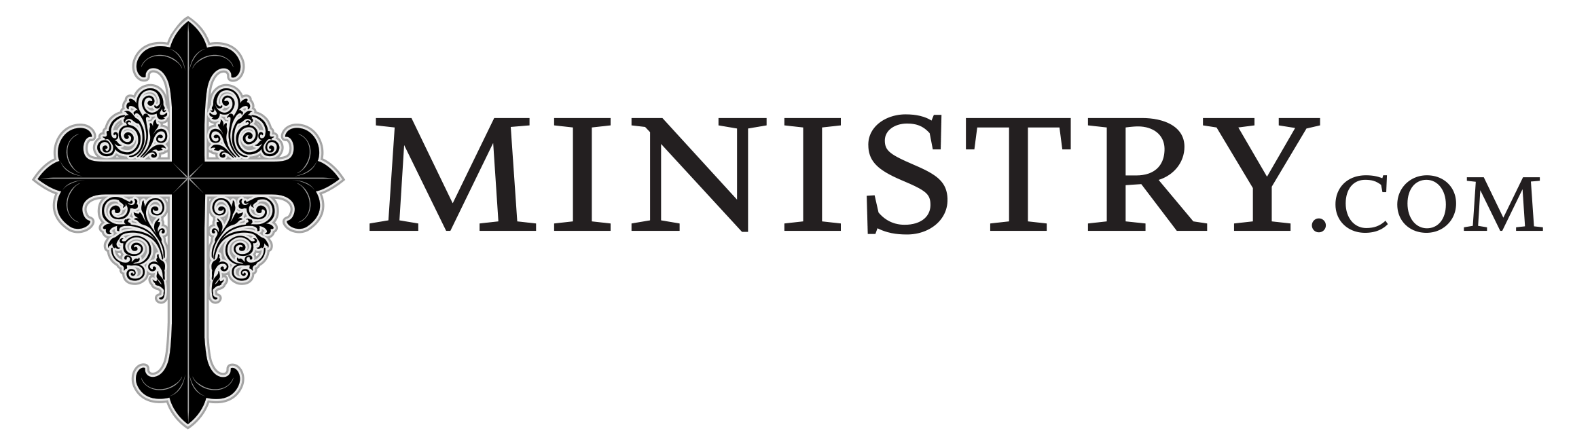 Ministry.com – Facilitating Christian Ministry